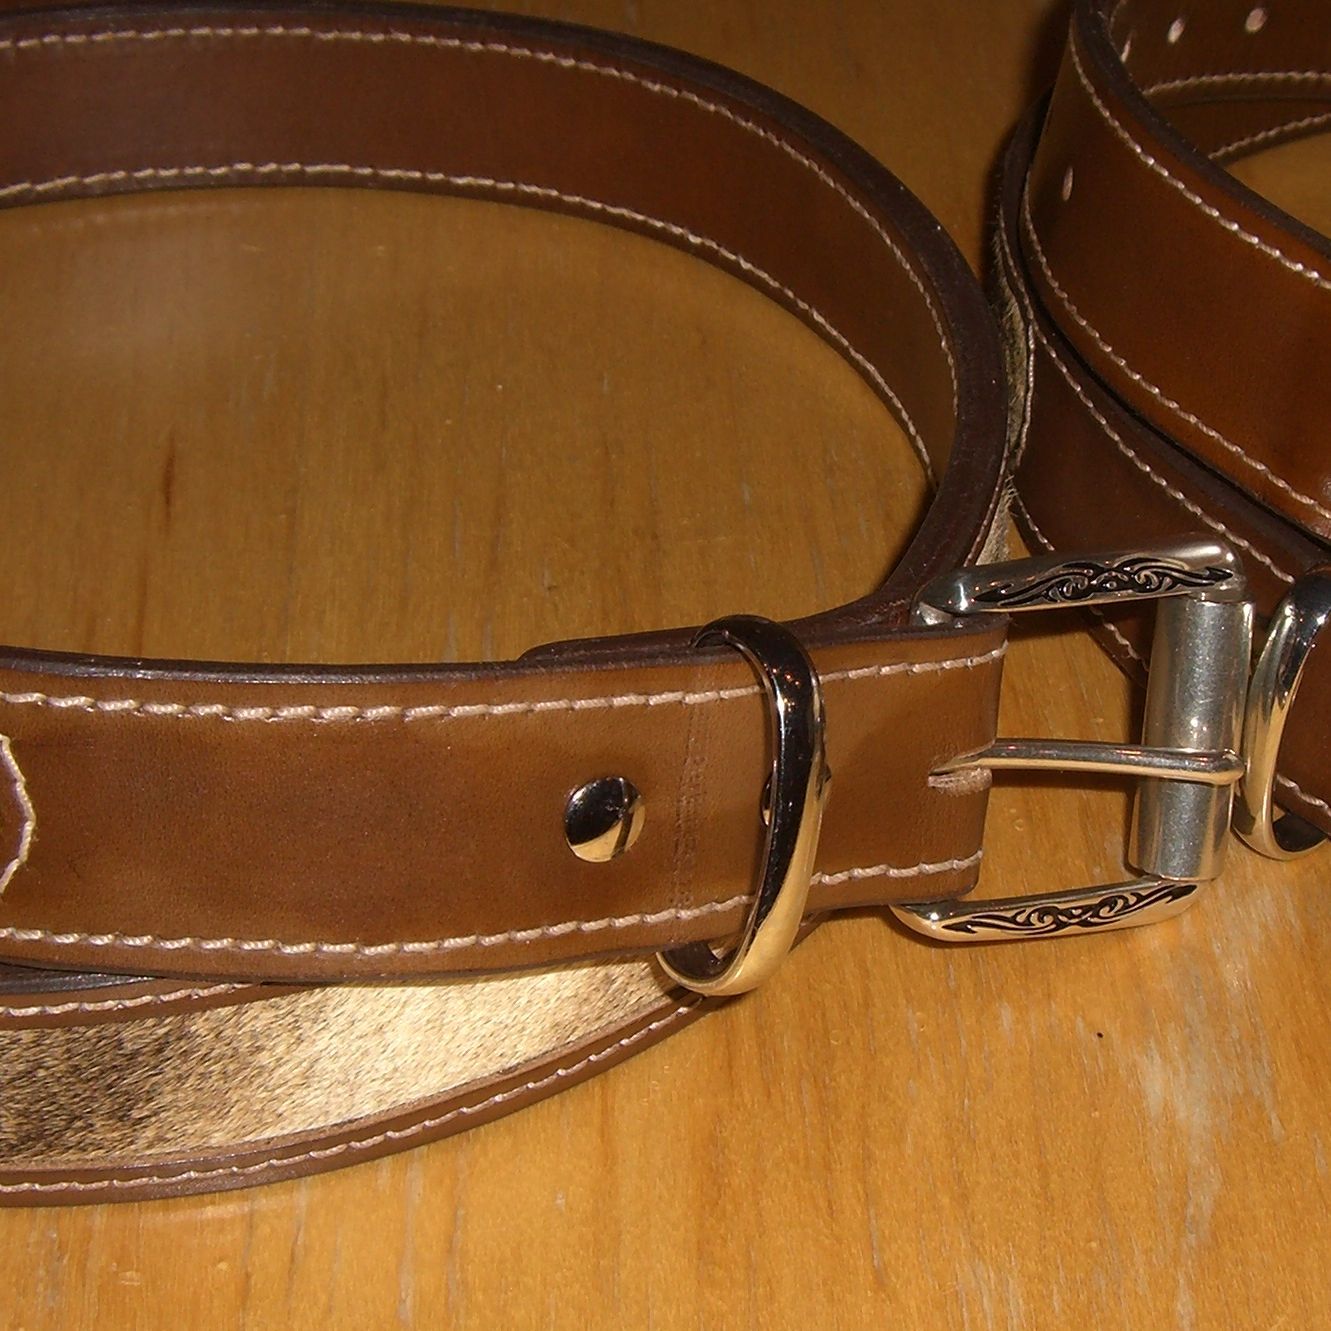 Leather Belts in Prescott Valley, Arizona